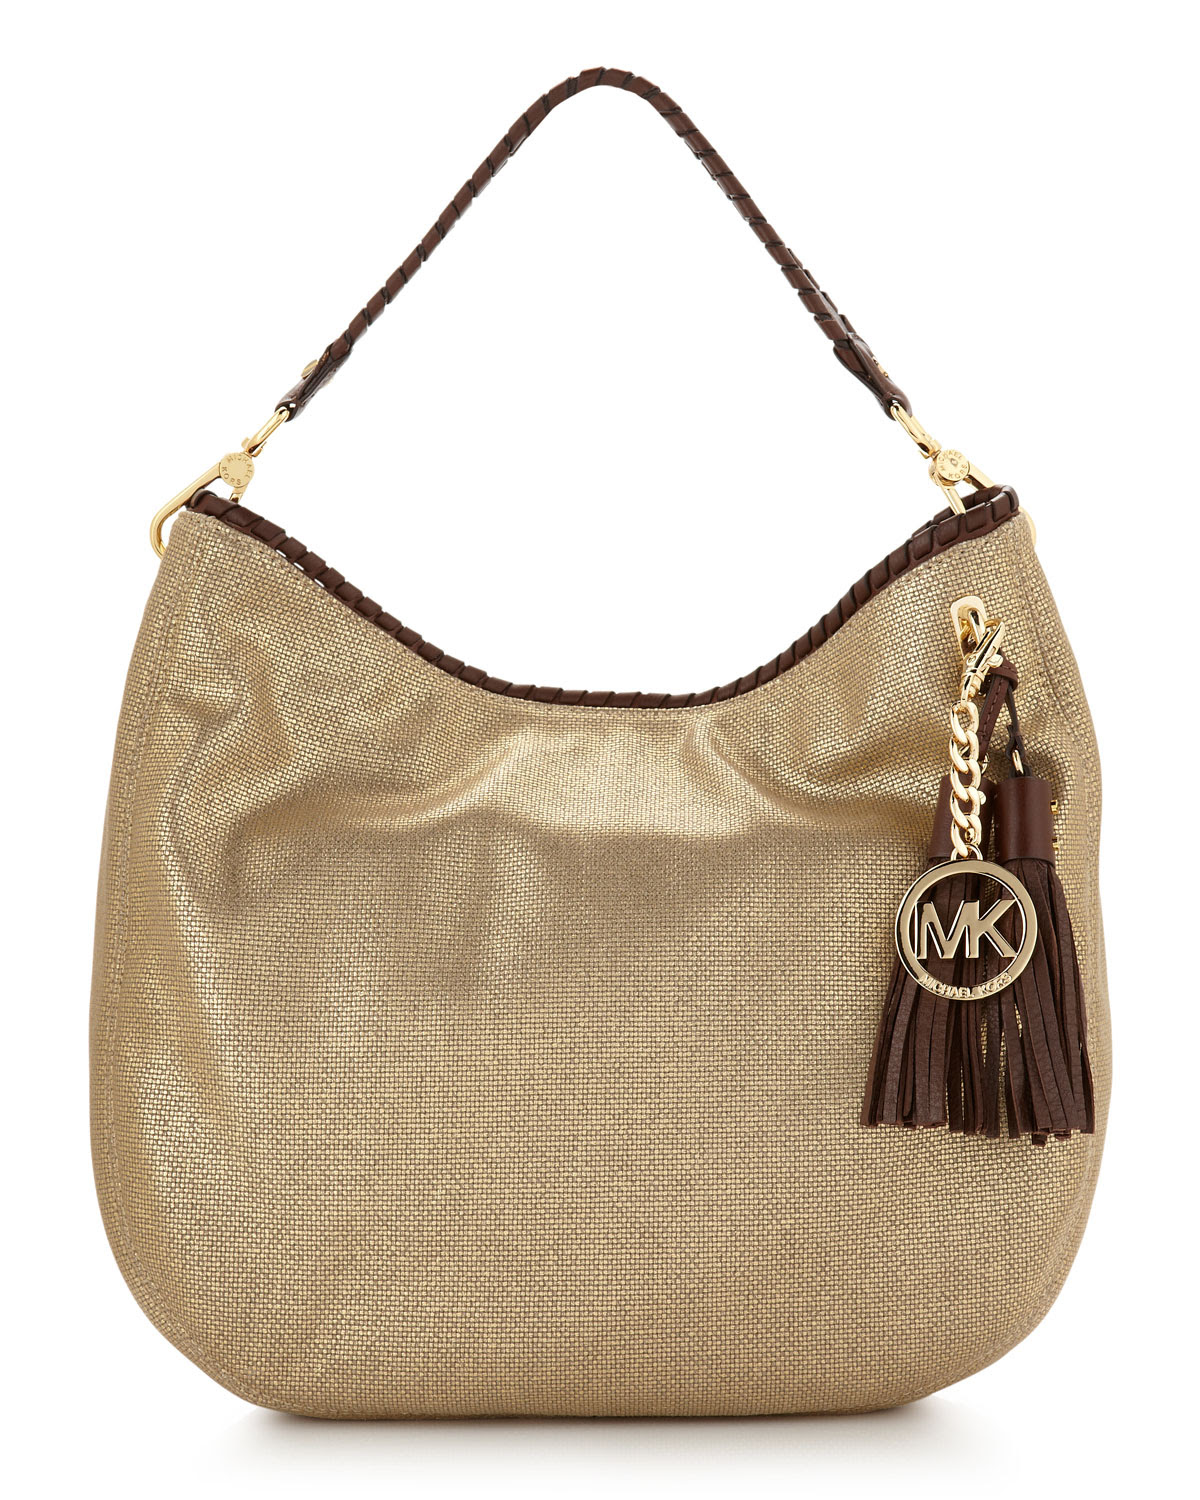 Gold Handbags: Gold Metallic Michael Kors Handbag